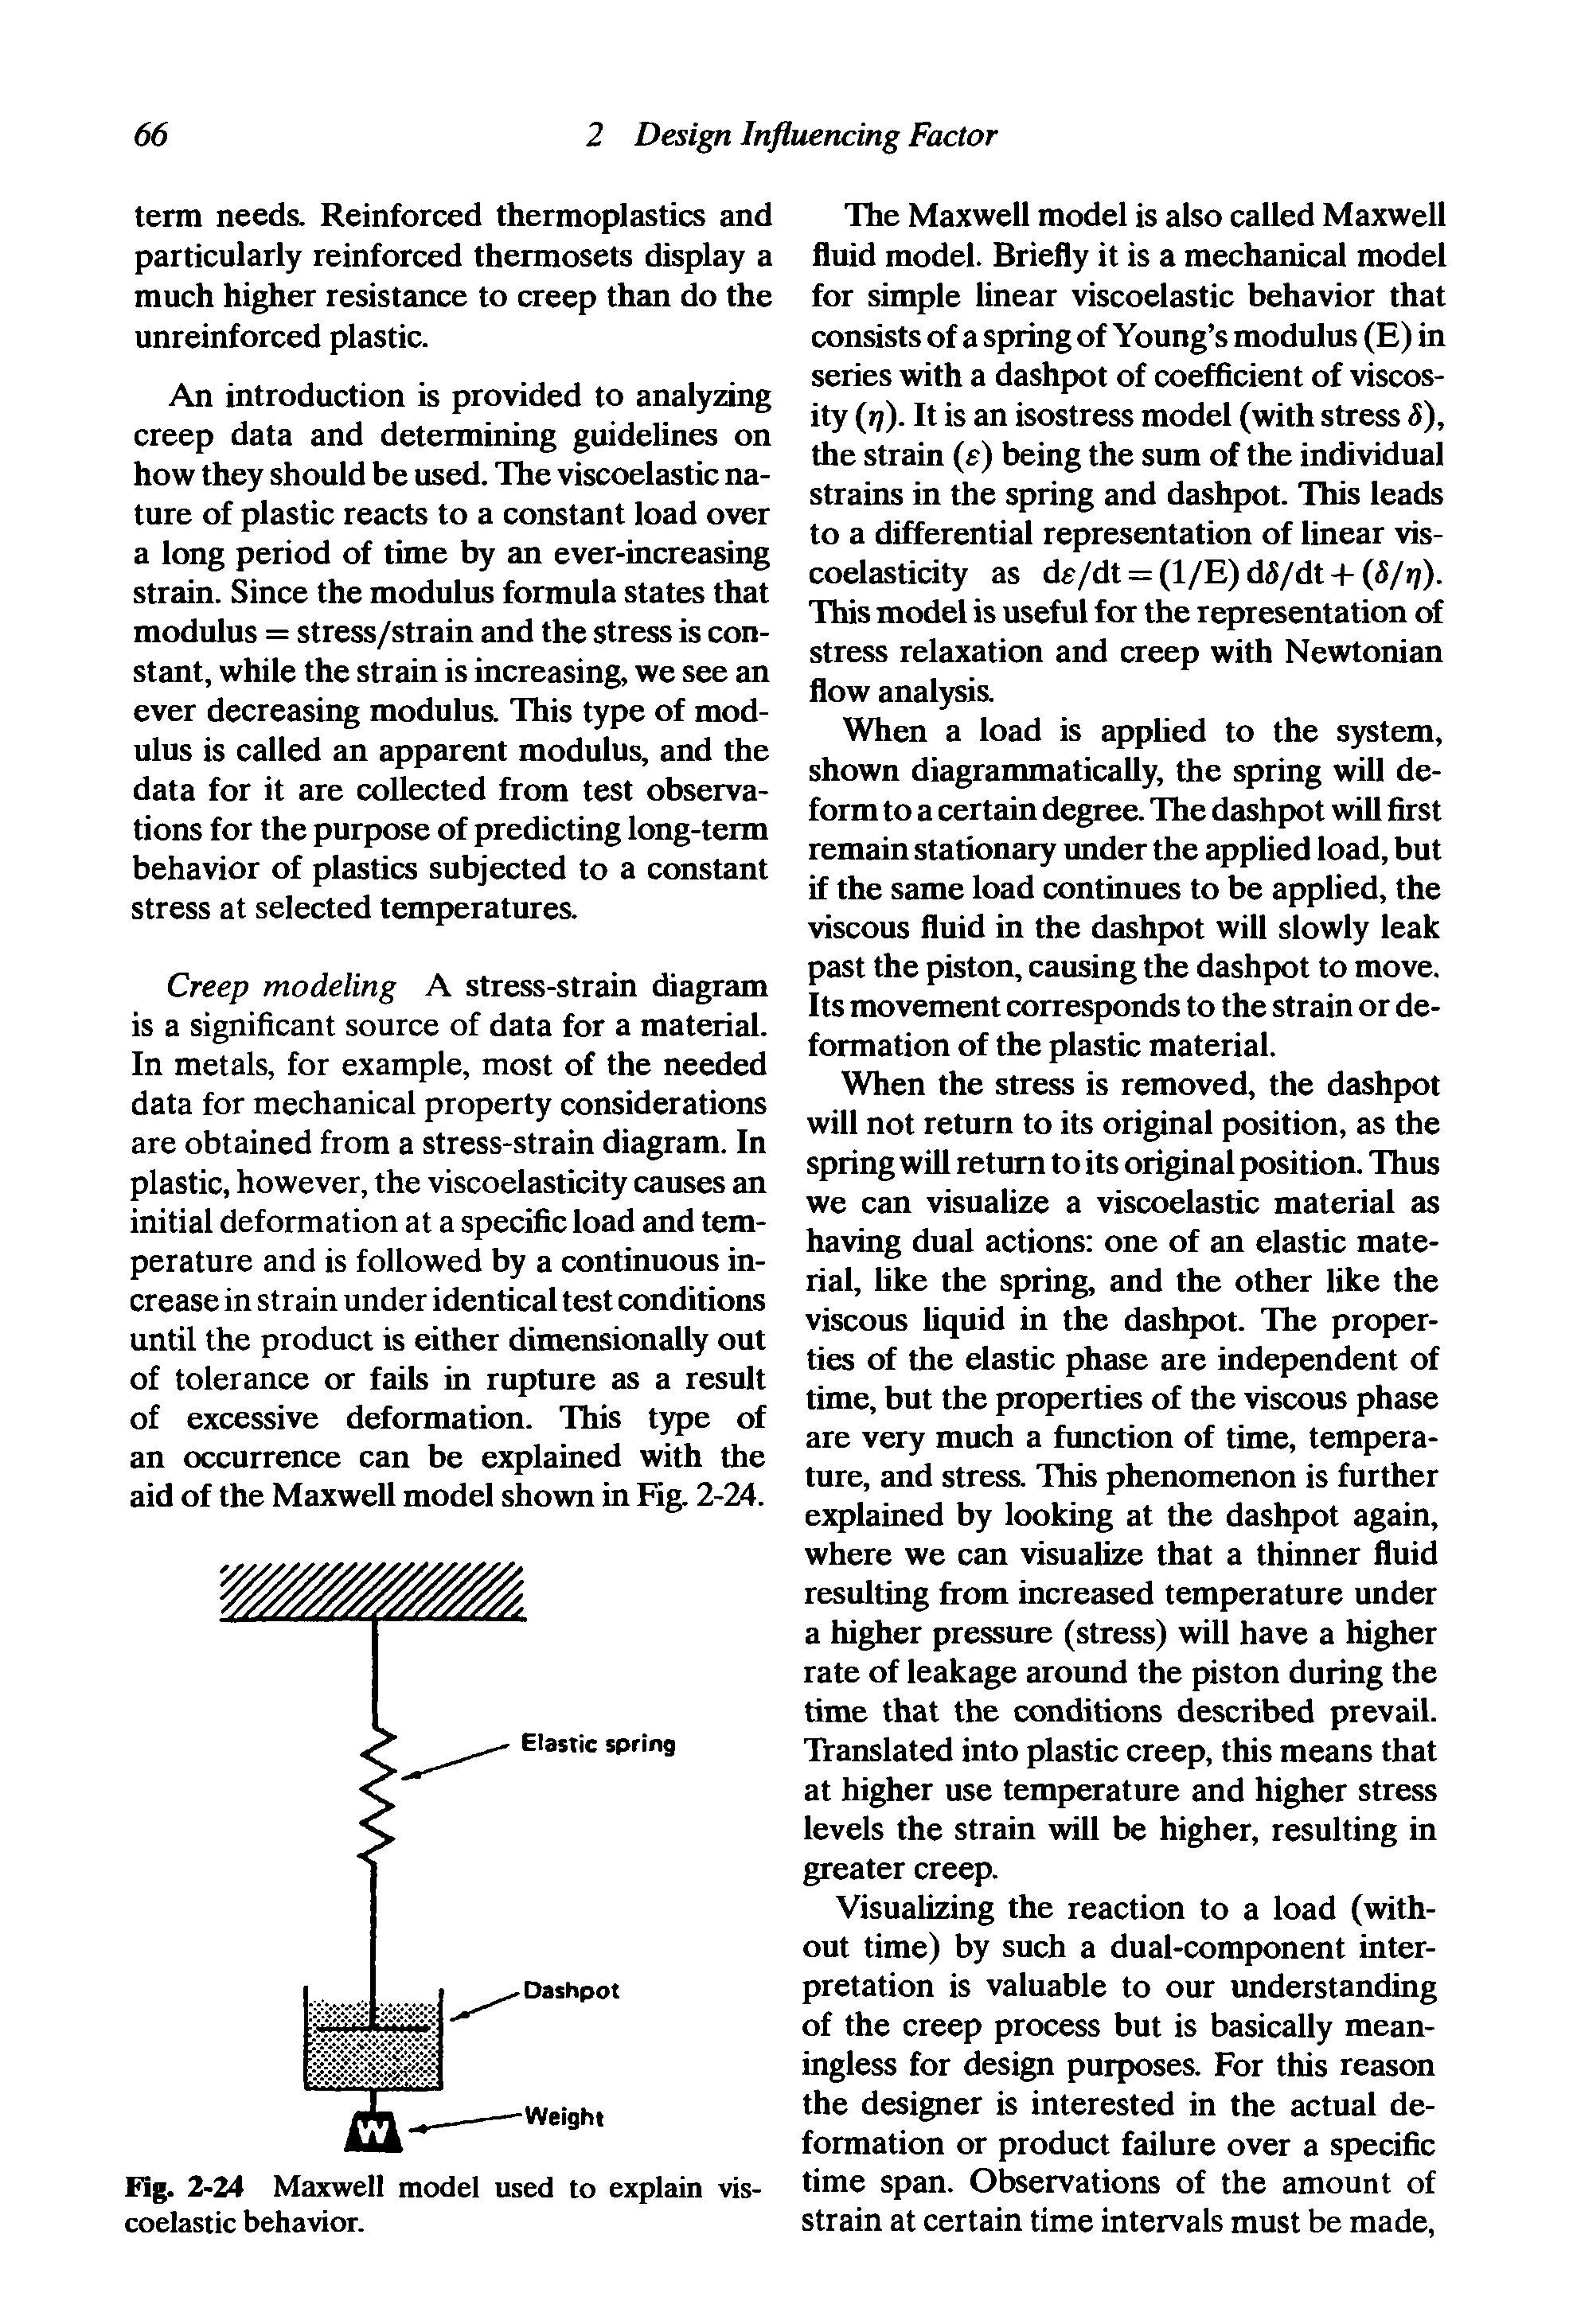 Fig. 2-24 Maxwell model used to explain viscoelastic behavior.